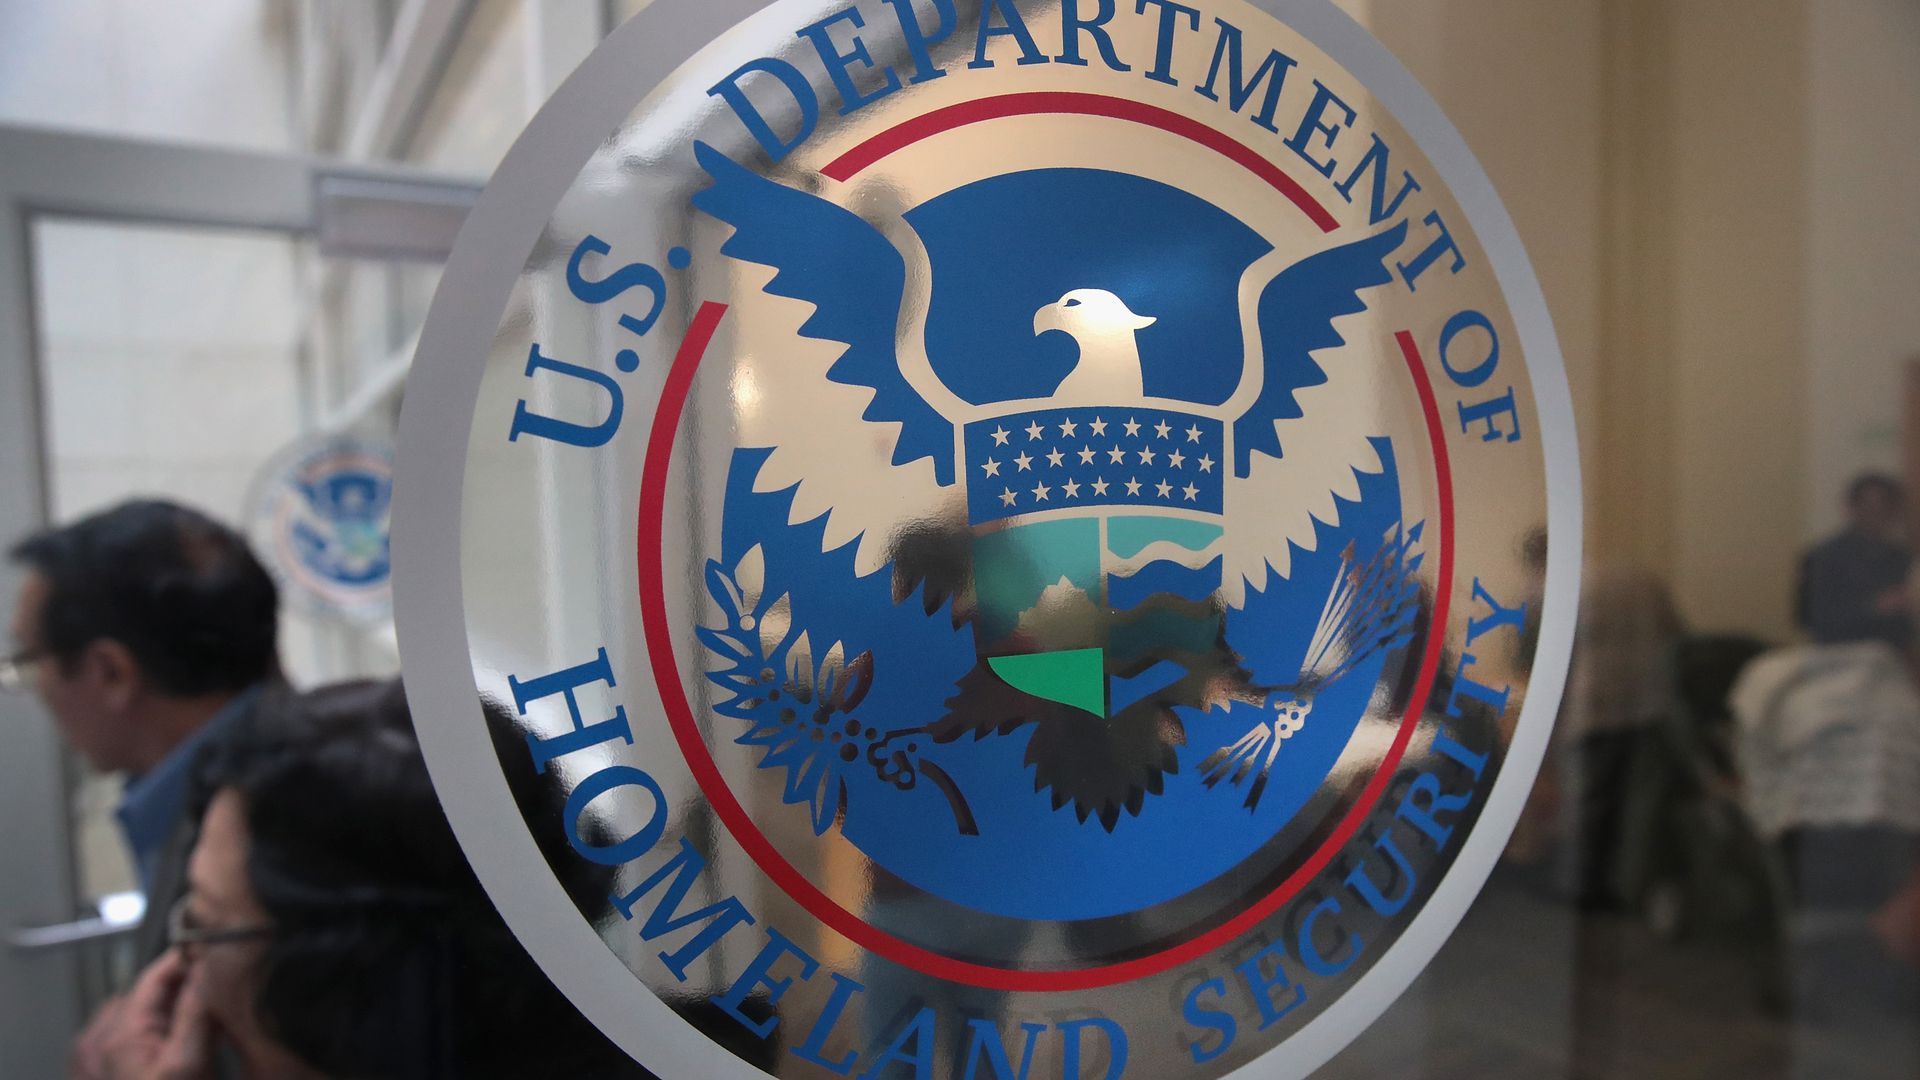 Department of Homeland Security logo. 